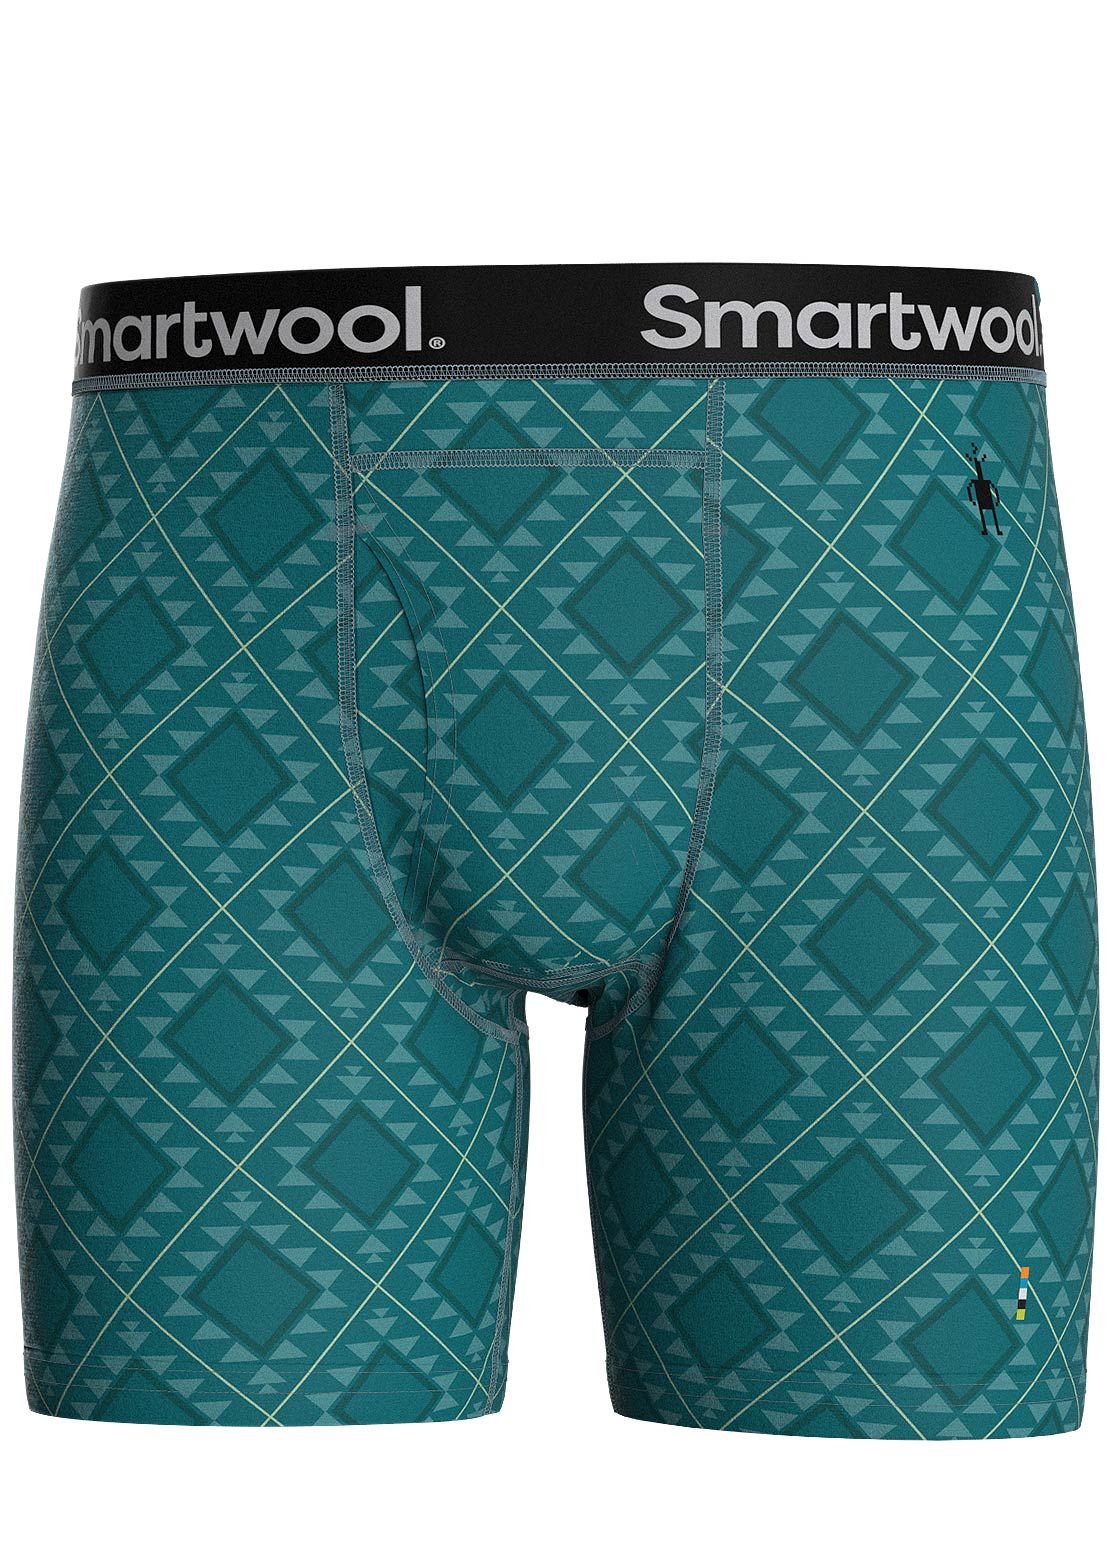 Smartwool Men's Merino Sport 150 Brief - PRFO Sports